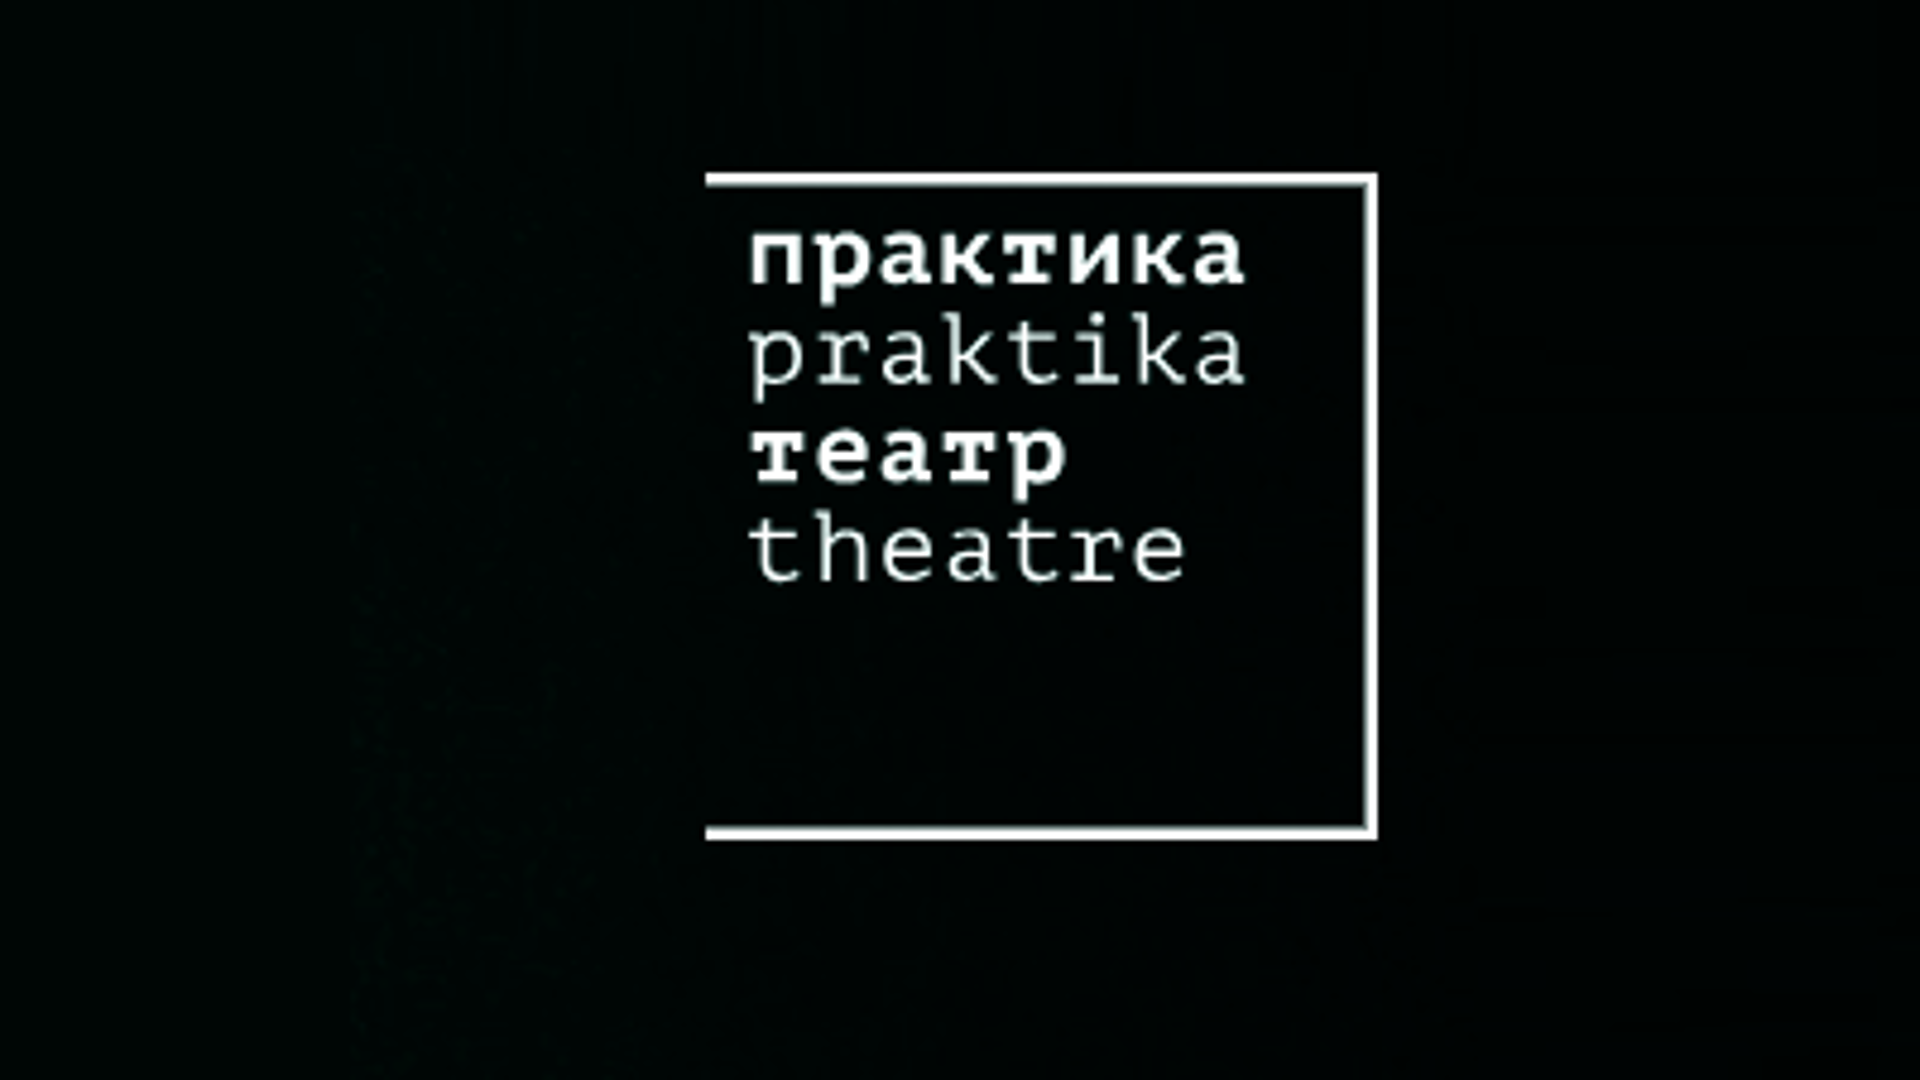 Театр практика афиша